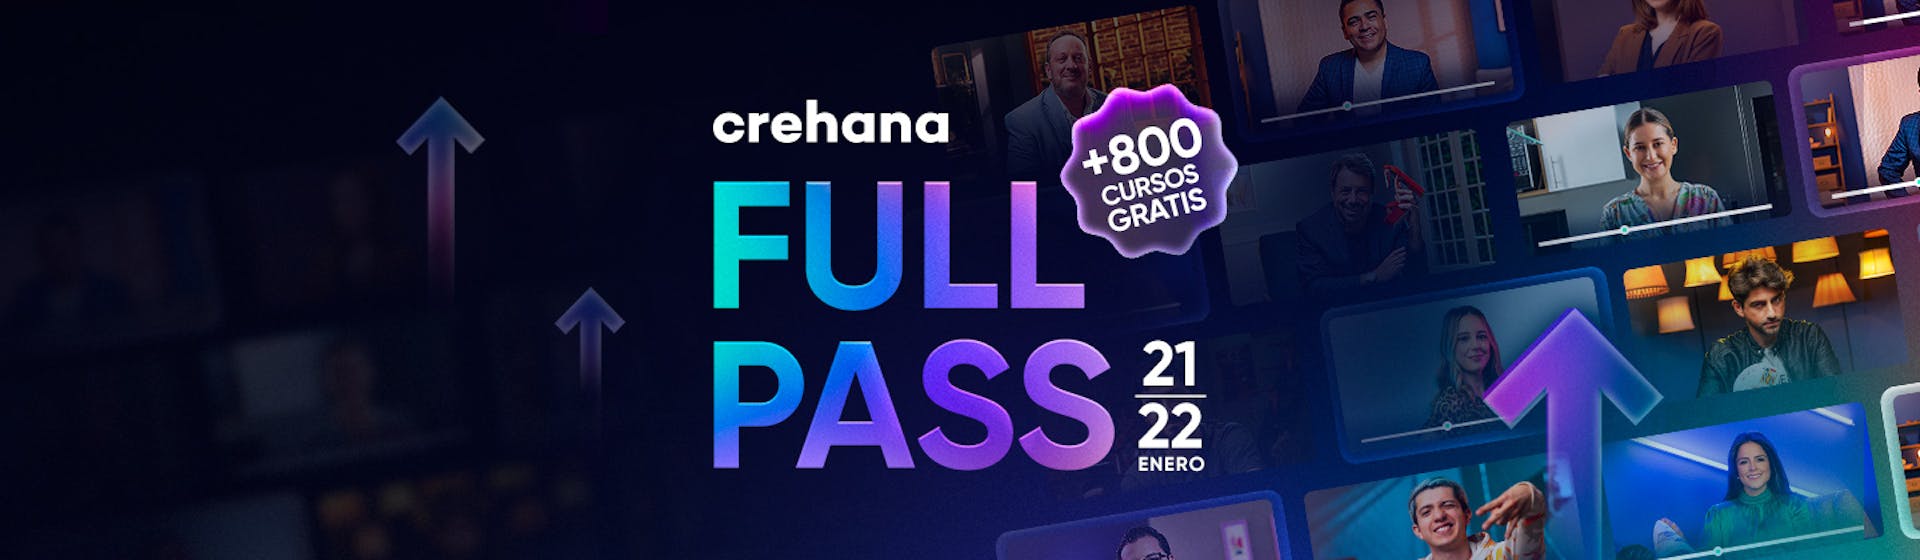 ¡Lee esta guía del Full Pass Crehana para aprovechar las 48h de acceso libre al máximo!